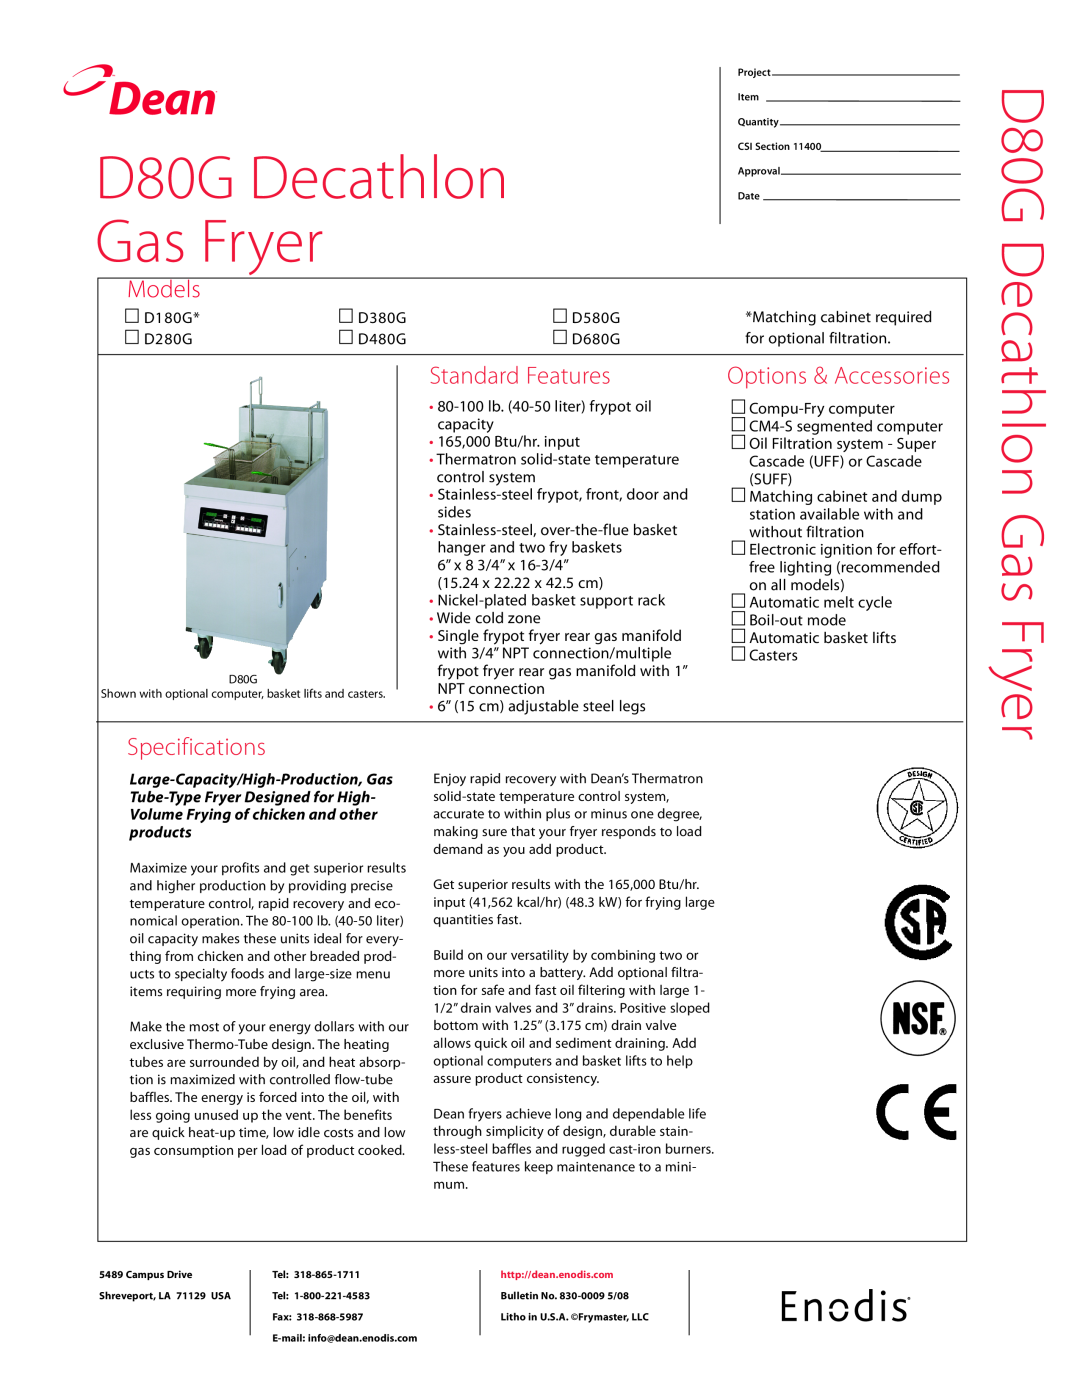 Frymaster D580G, D680G specifications Dean, D80G Decathlon Gas Fryer, Models, Standard Features, Options & Accessories 